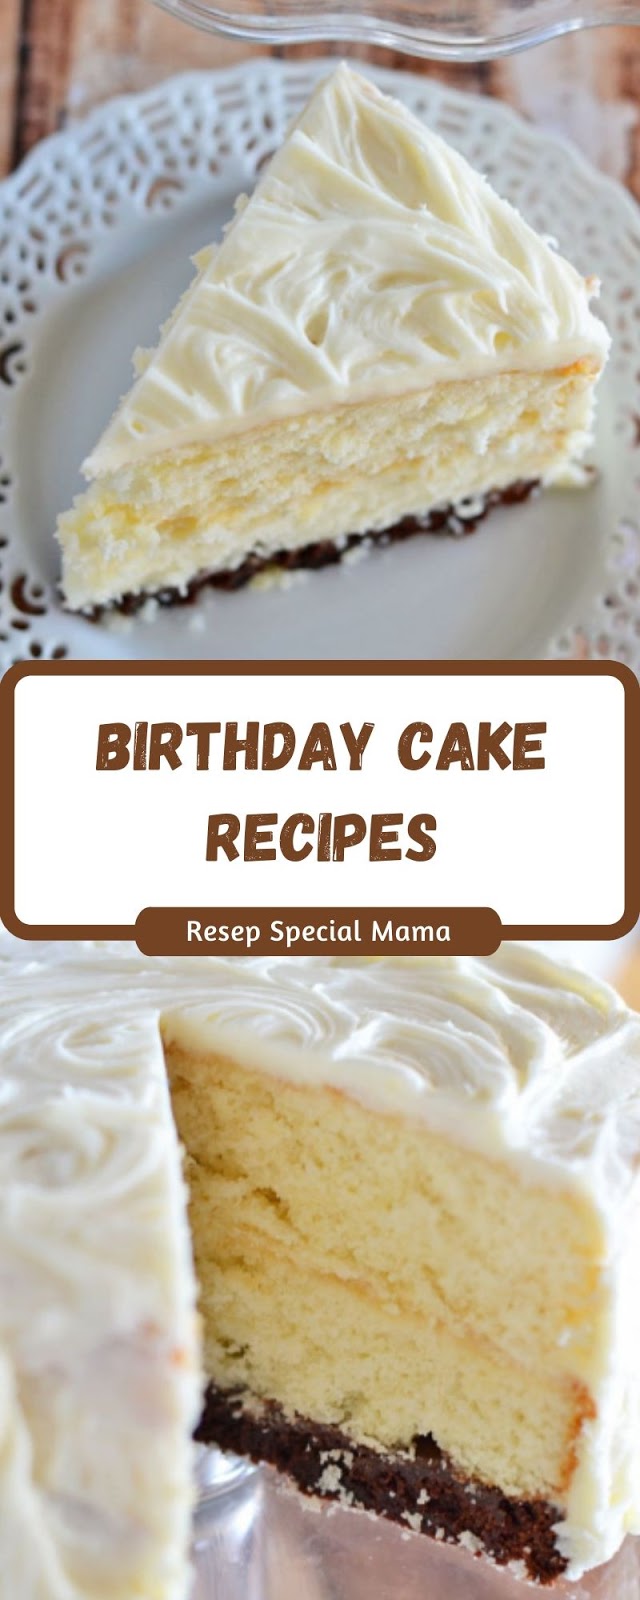 BIRTHDAY CAKE RECIPES